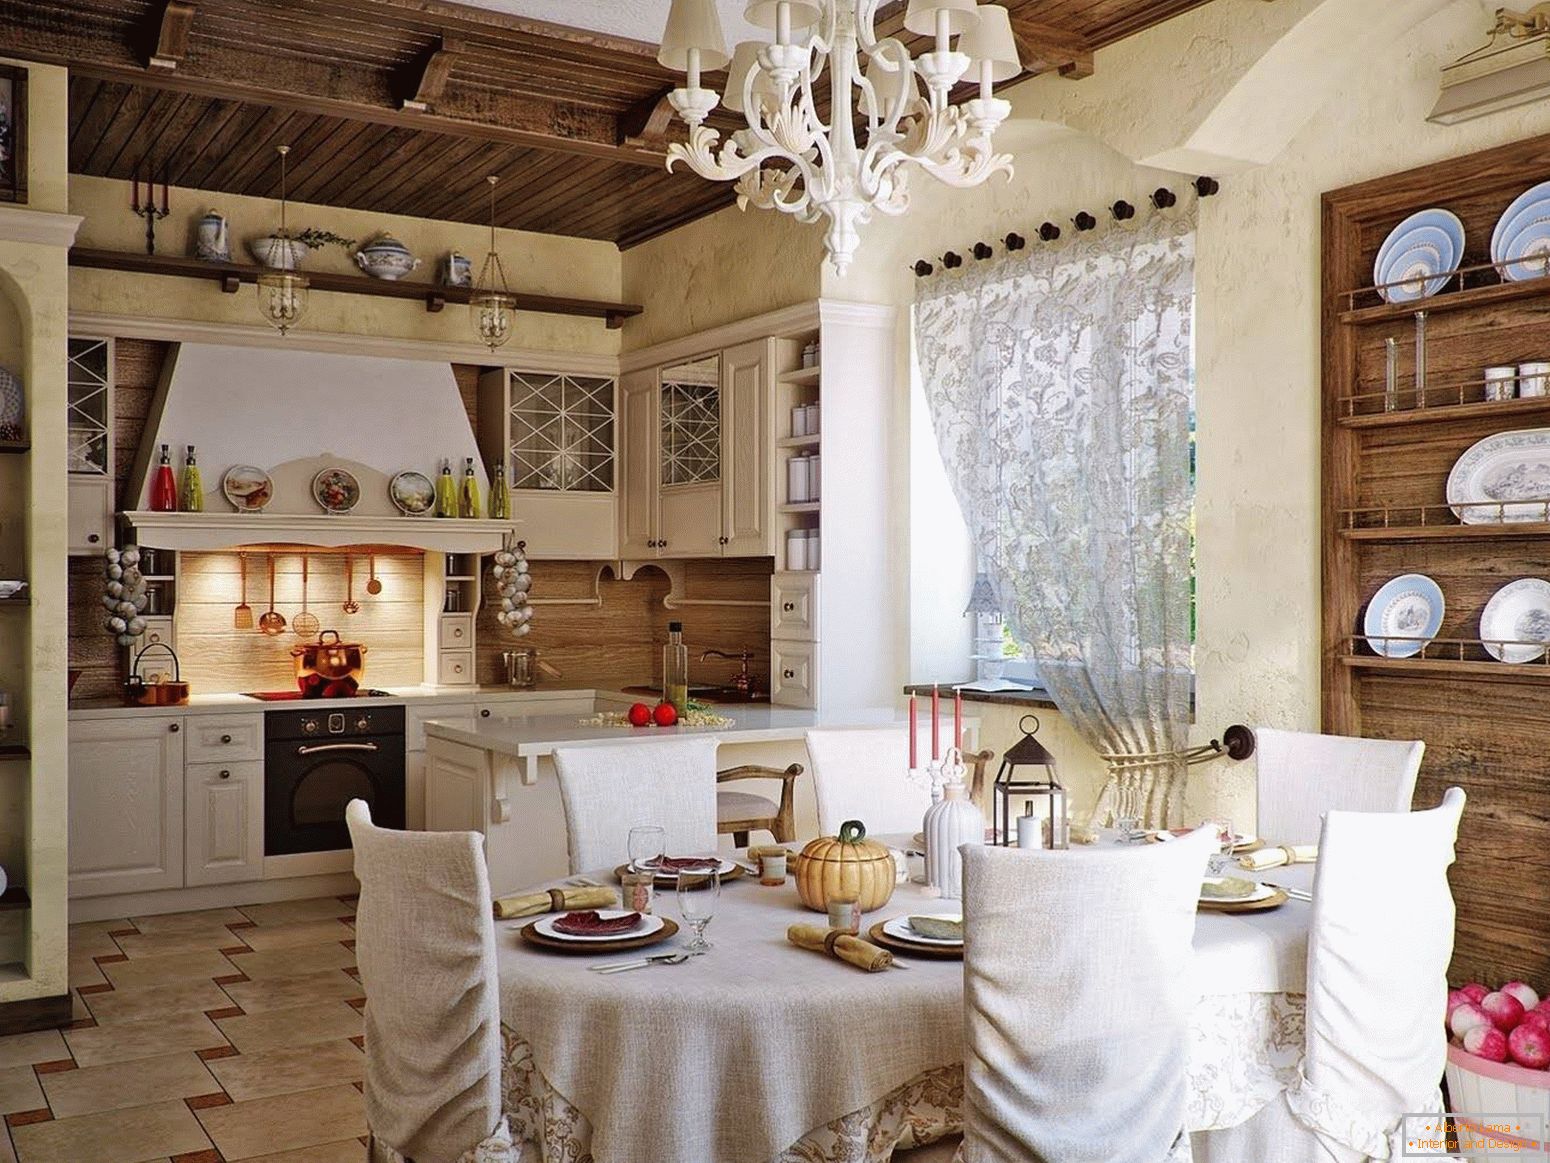 Interiér kuchyně v ruském stylu